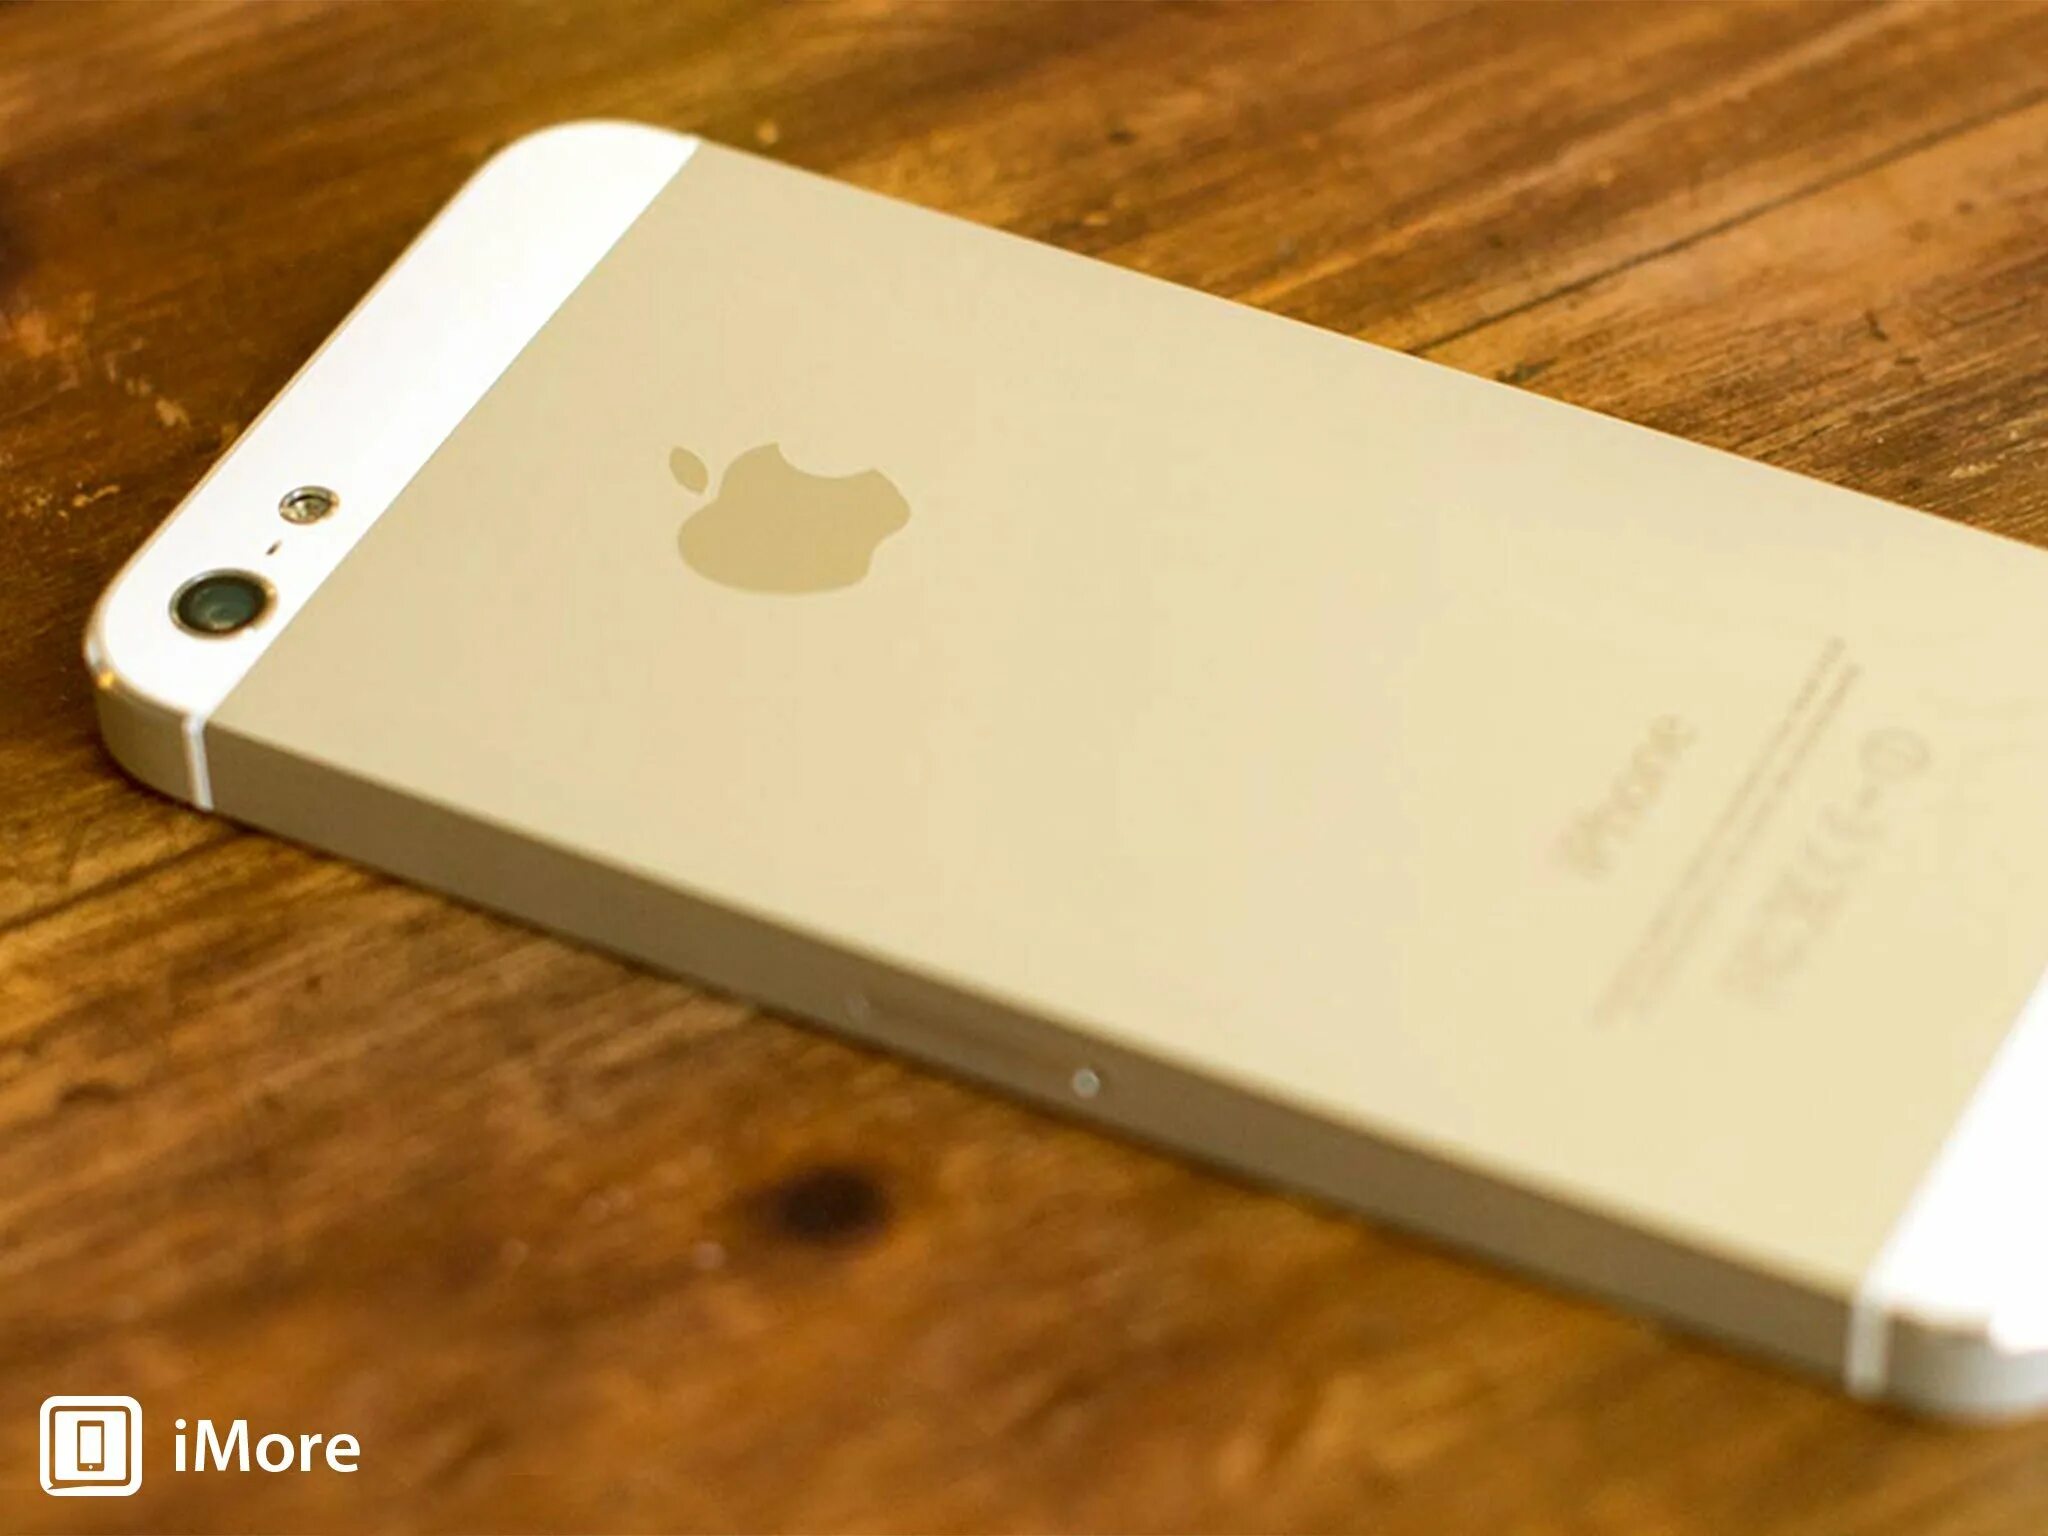 Iphone 5 год. Iphone 5s. Iphone 5s Gold. Айфон 5s белый. Айфон 5s Голд.